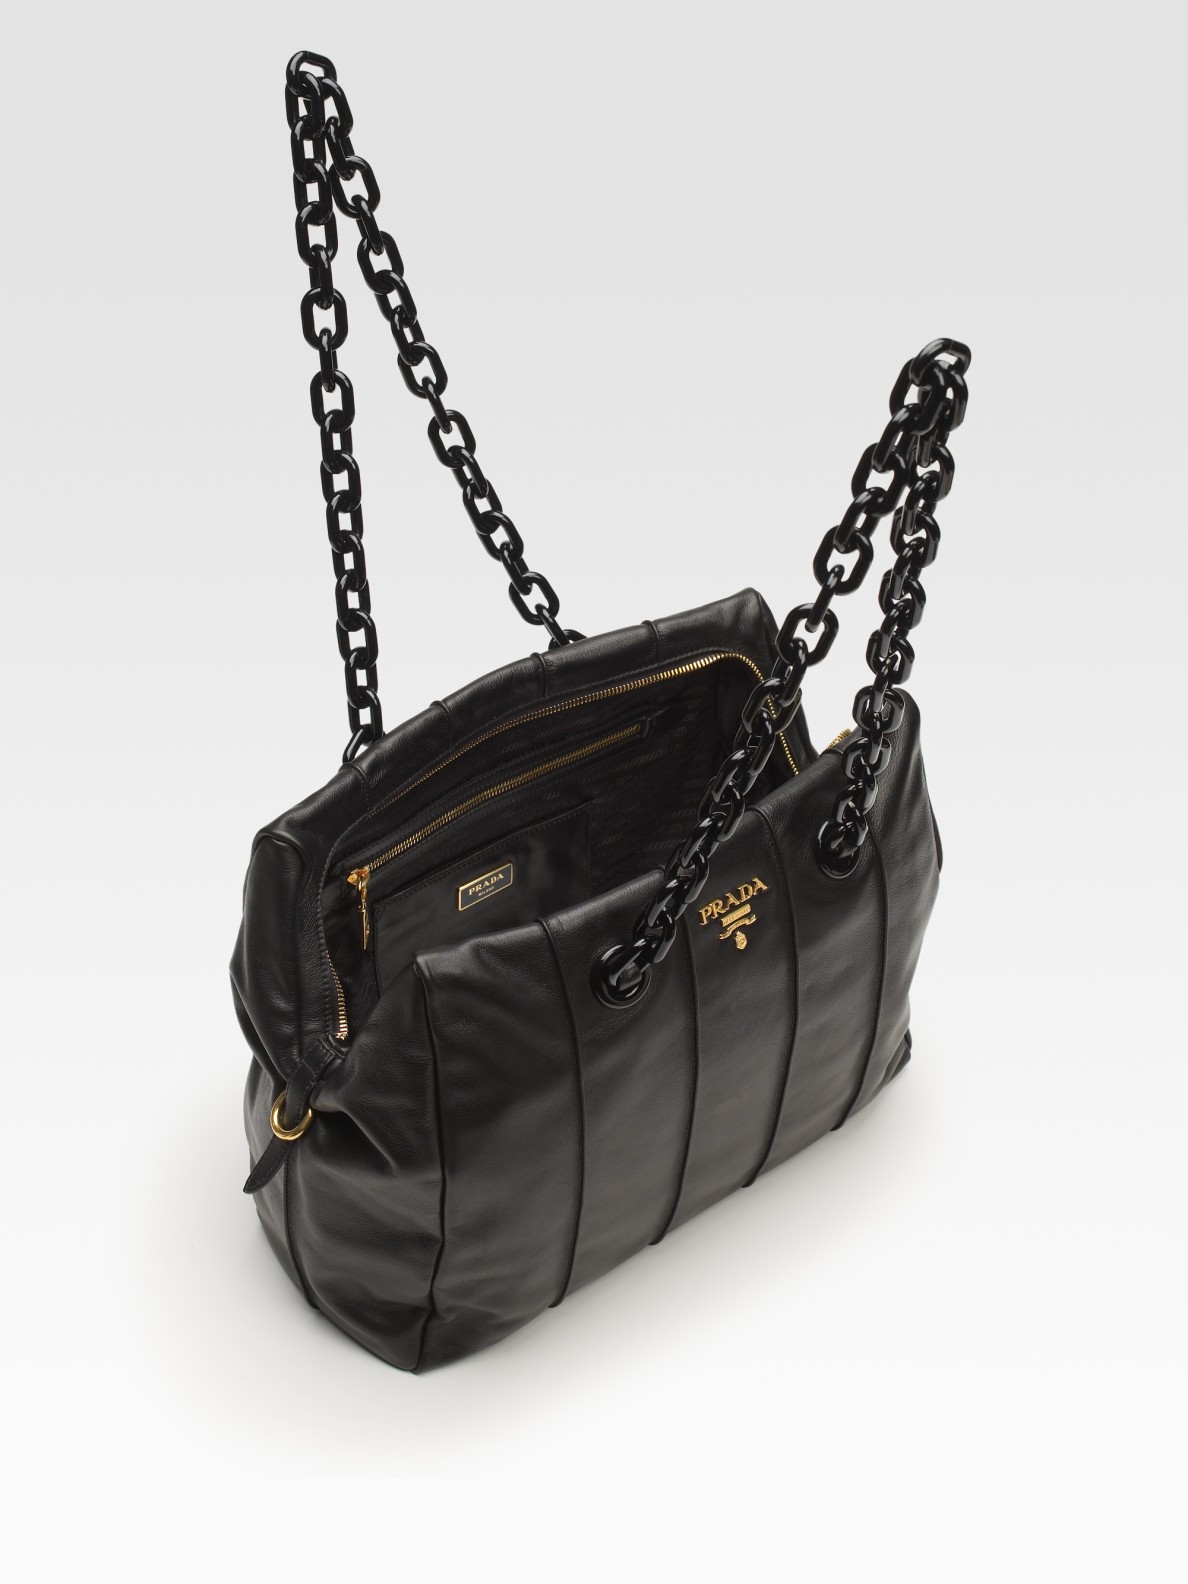 Prada Soft Calf Chain Bag in Black - Lyst